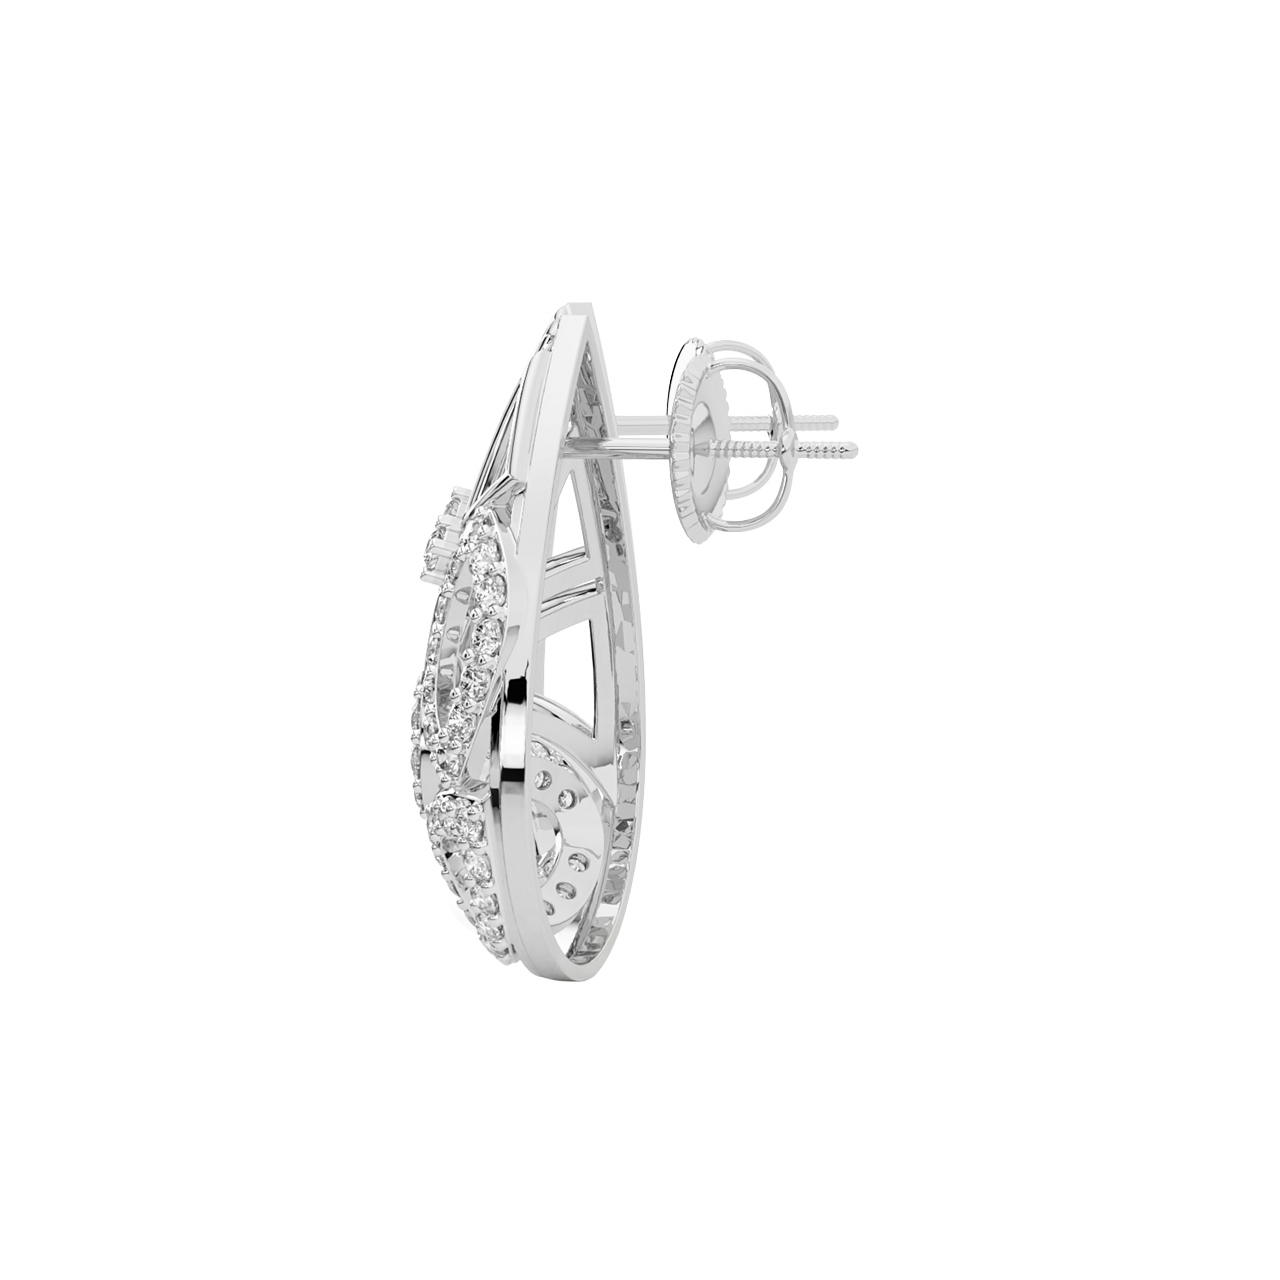 Adriel Round Diamond Stud Earrings